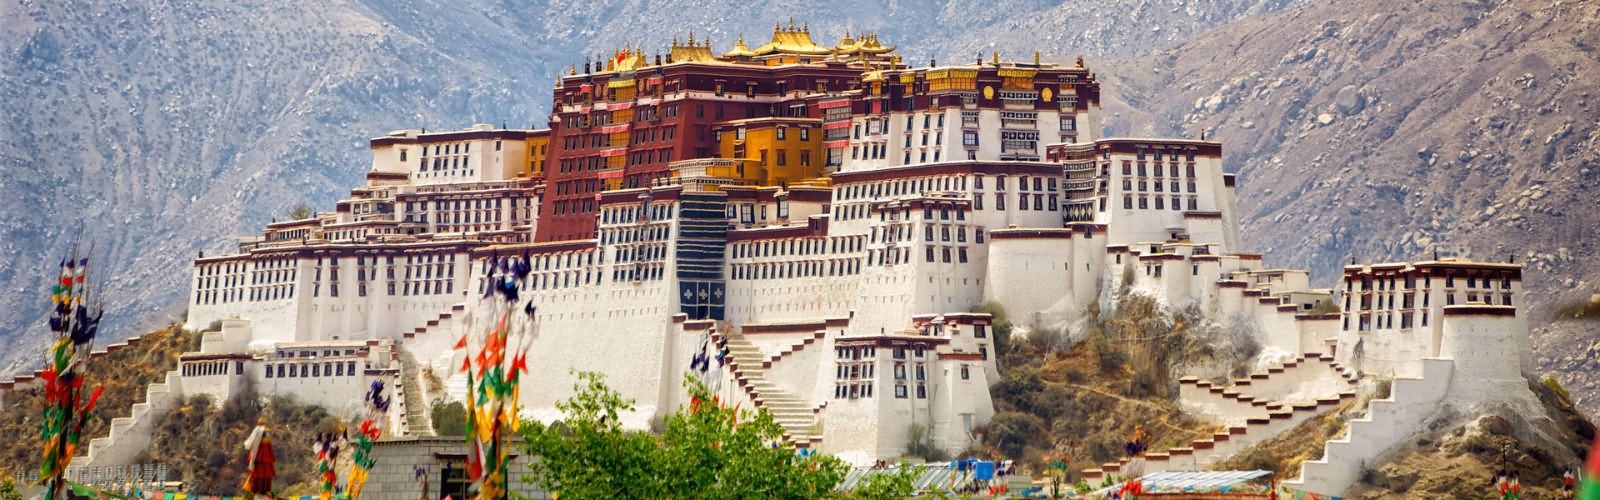 Beautiful Panorama View Of The Potala Palace In Tibet, China